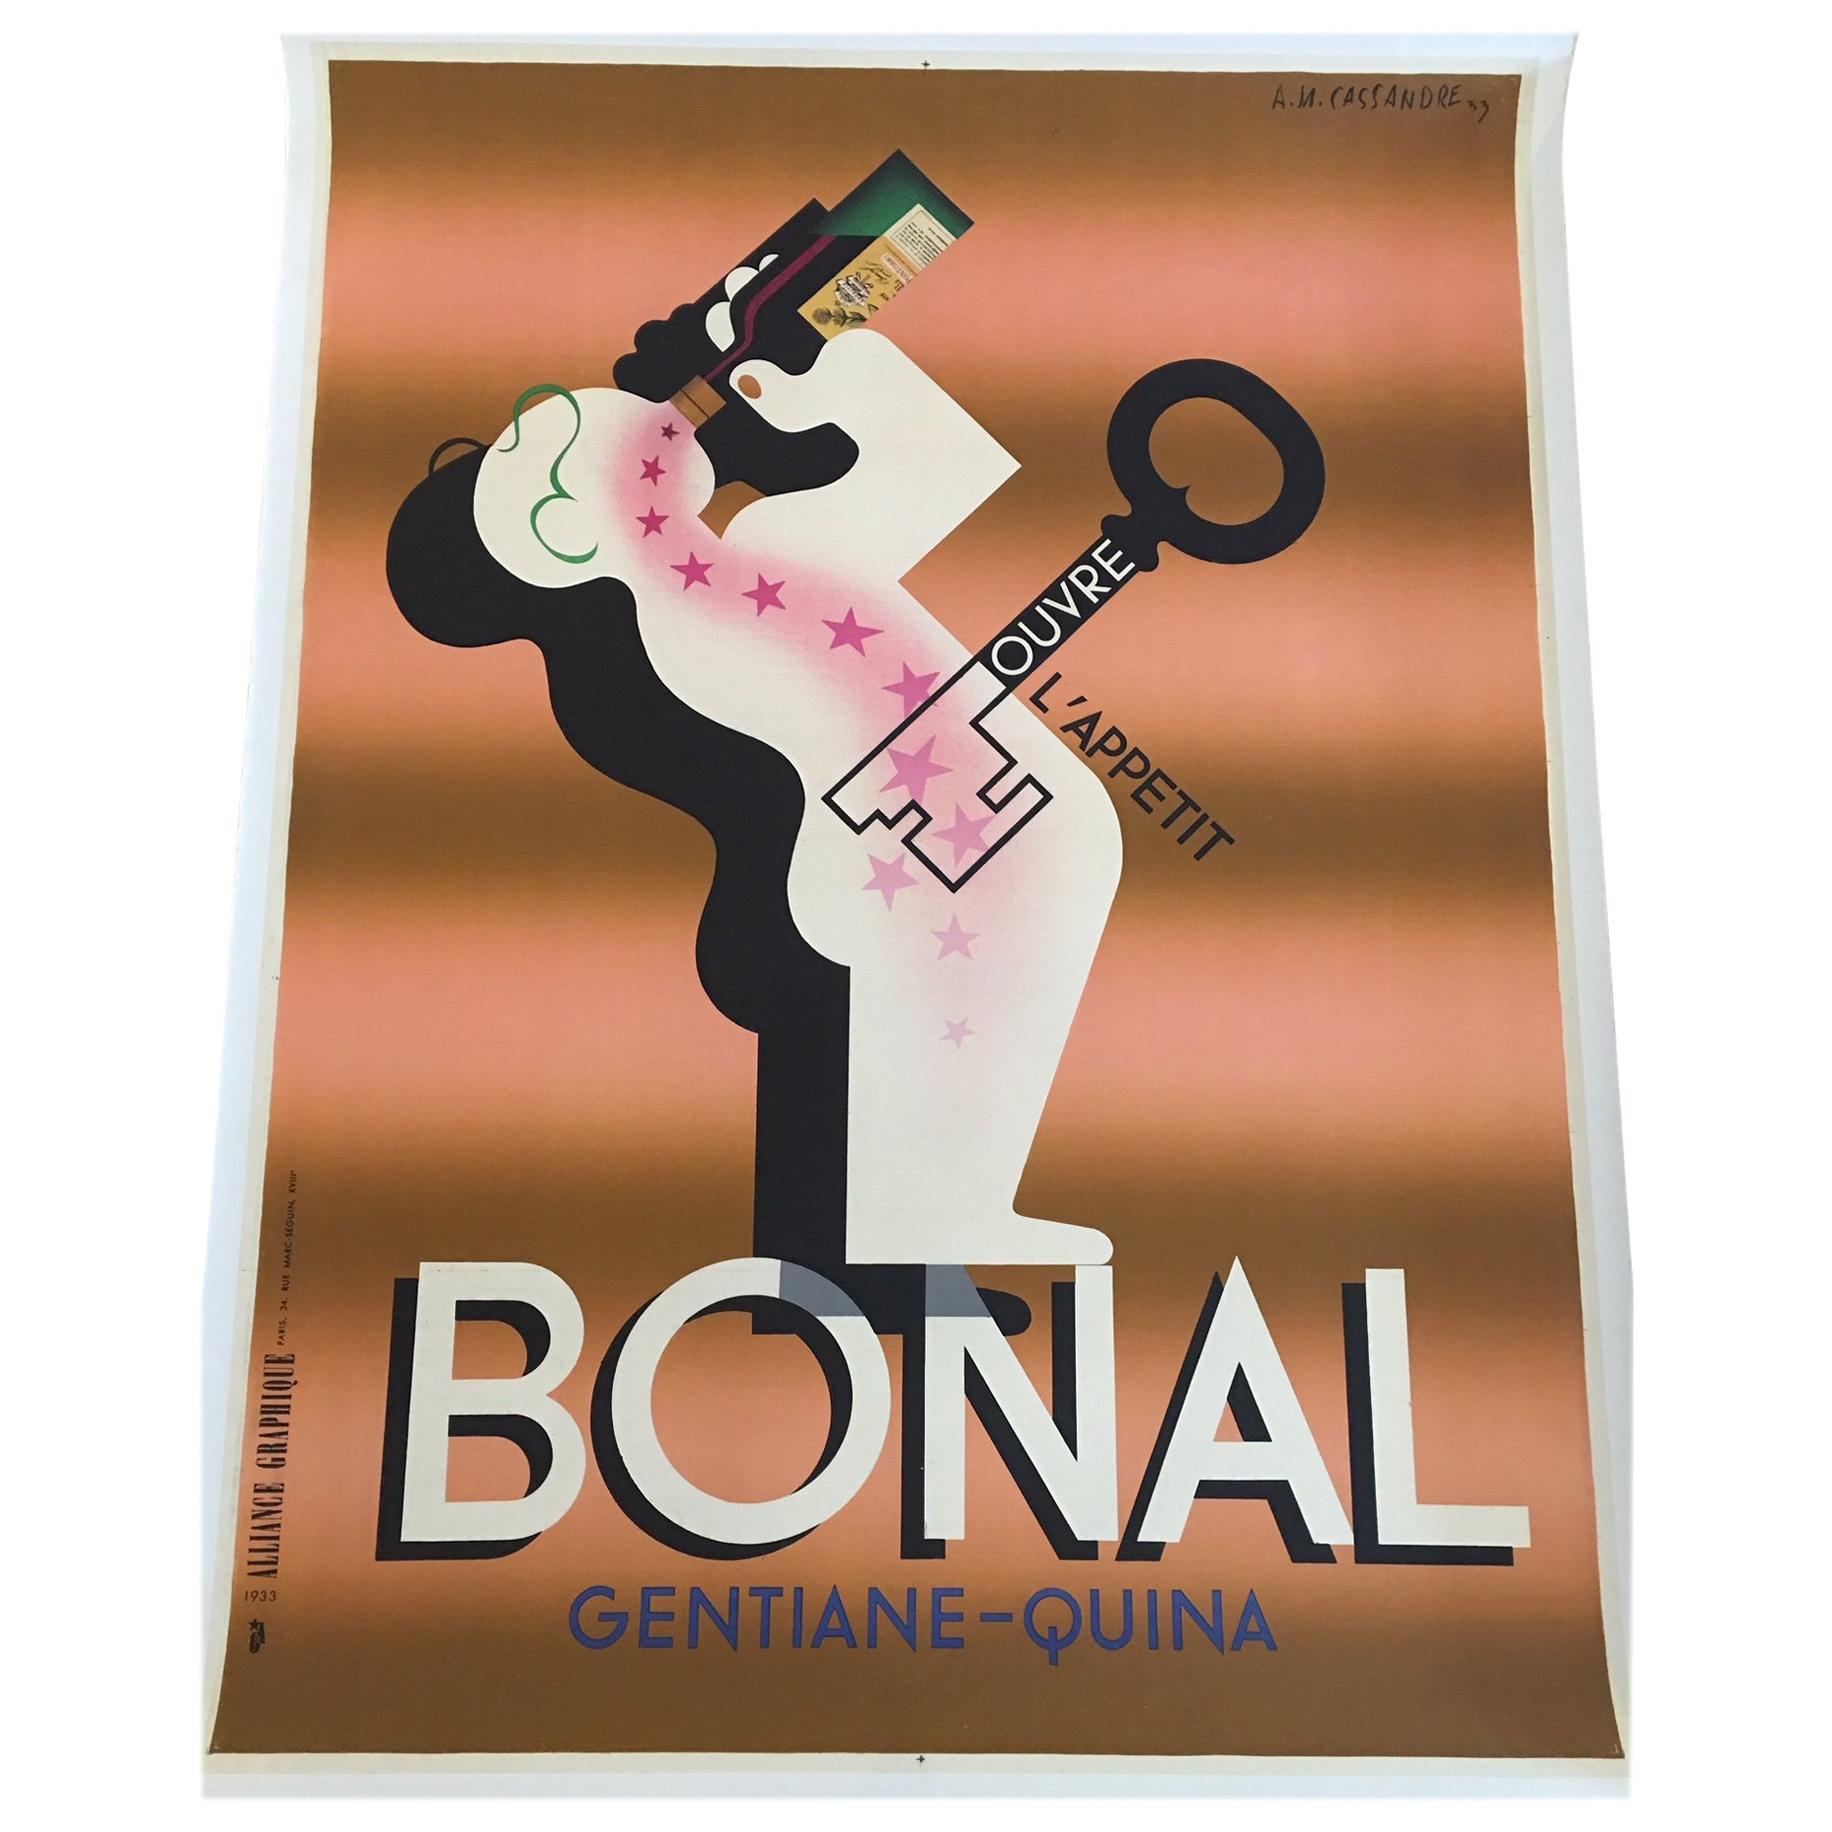 Original Vintage French Poster Bonal Gentiane Quina Ouvre L’Appetit, 1933 For Sale